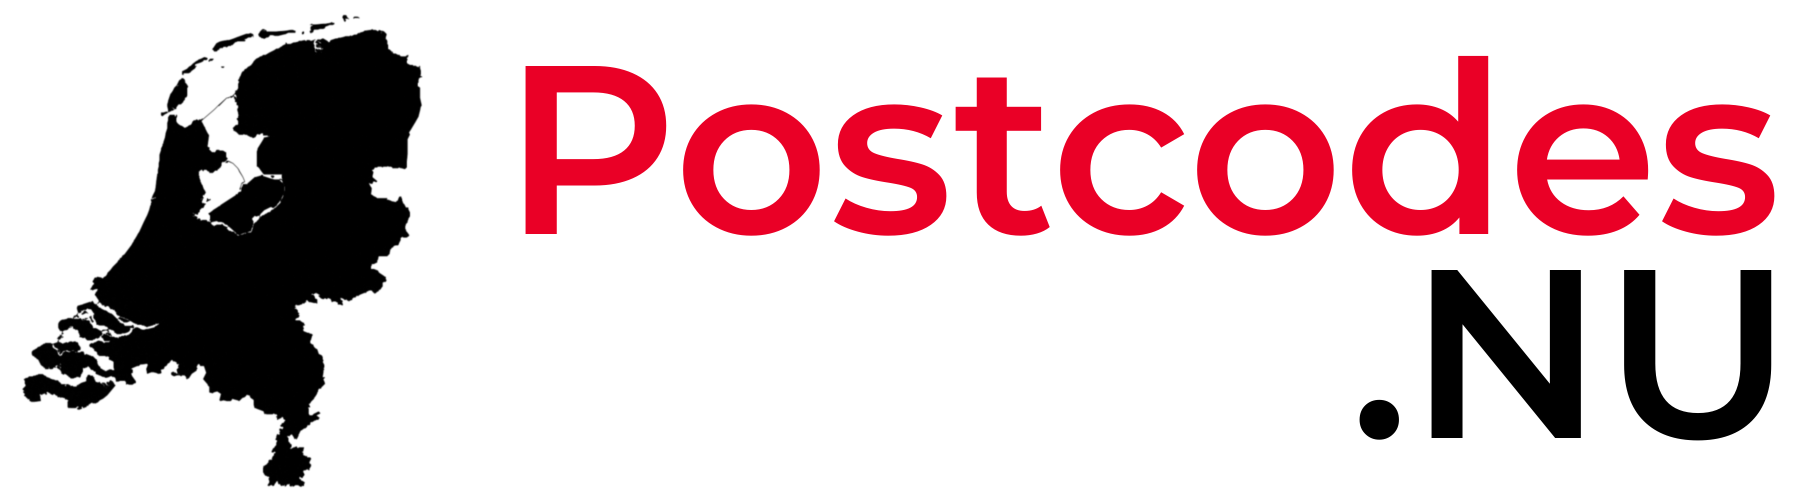 Postcodes.NU Logo